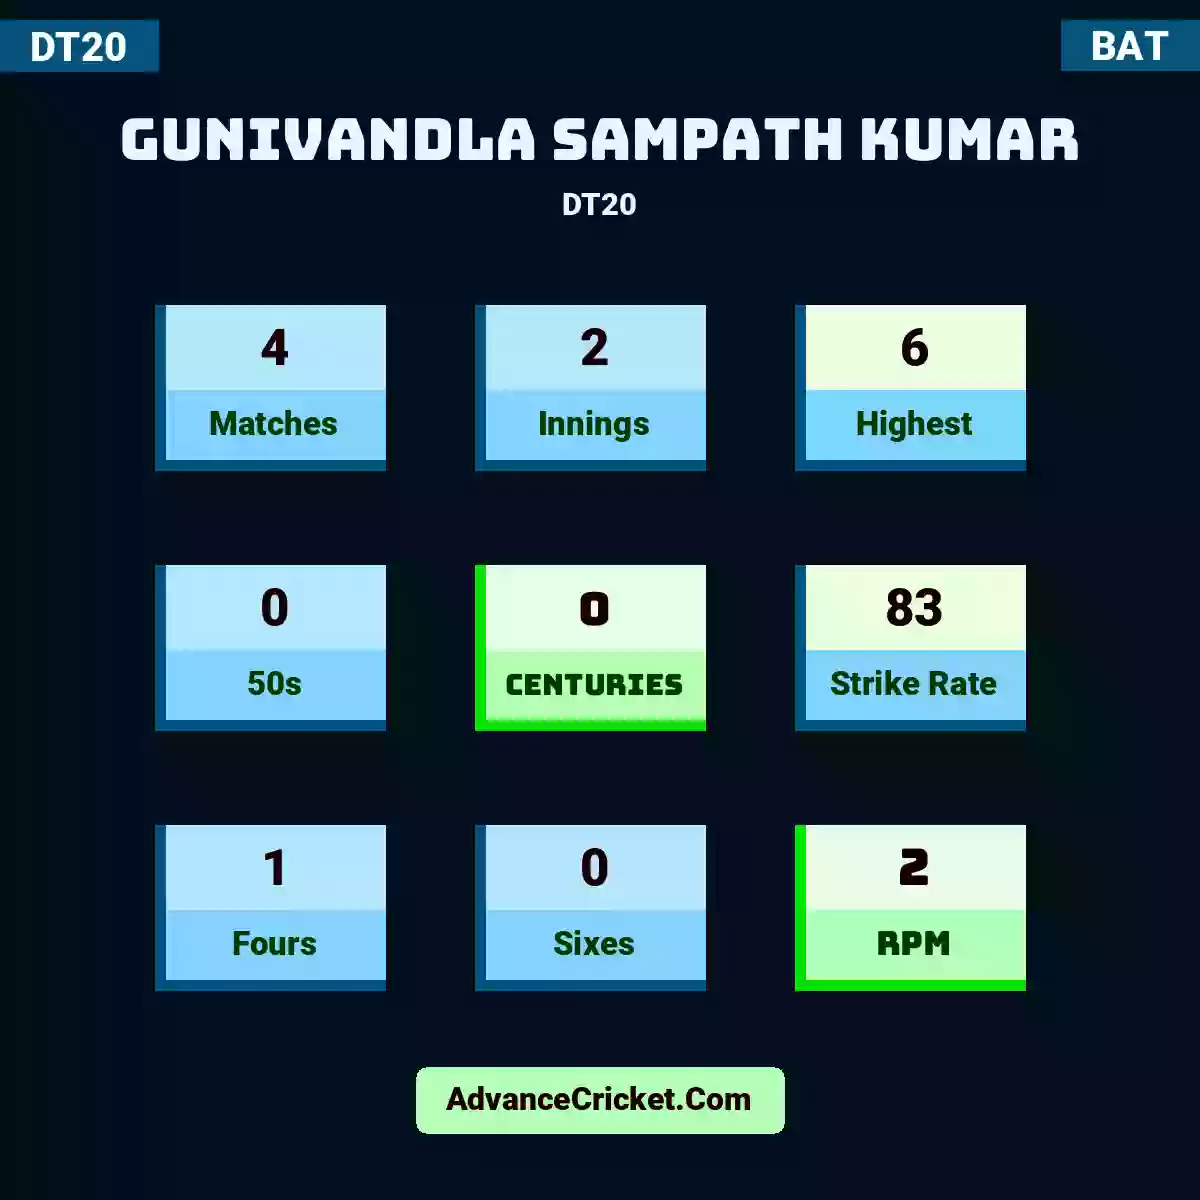 Gunivandla Sampath Kumar DT20 , Gunivandla Sampath Kumar played 4 matches, scored 6 runs as highest, 0 half-centuries, and 0 centuries, with a strike rate of 83. G.Sampath.Kumar hit 1 fours and 0 sixes, with an RPM of 2.